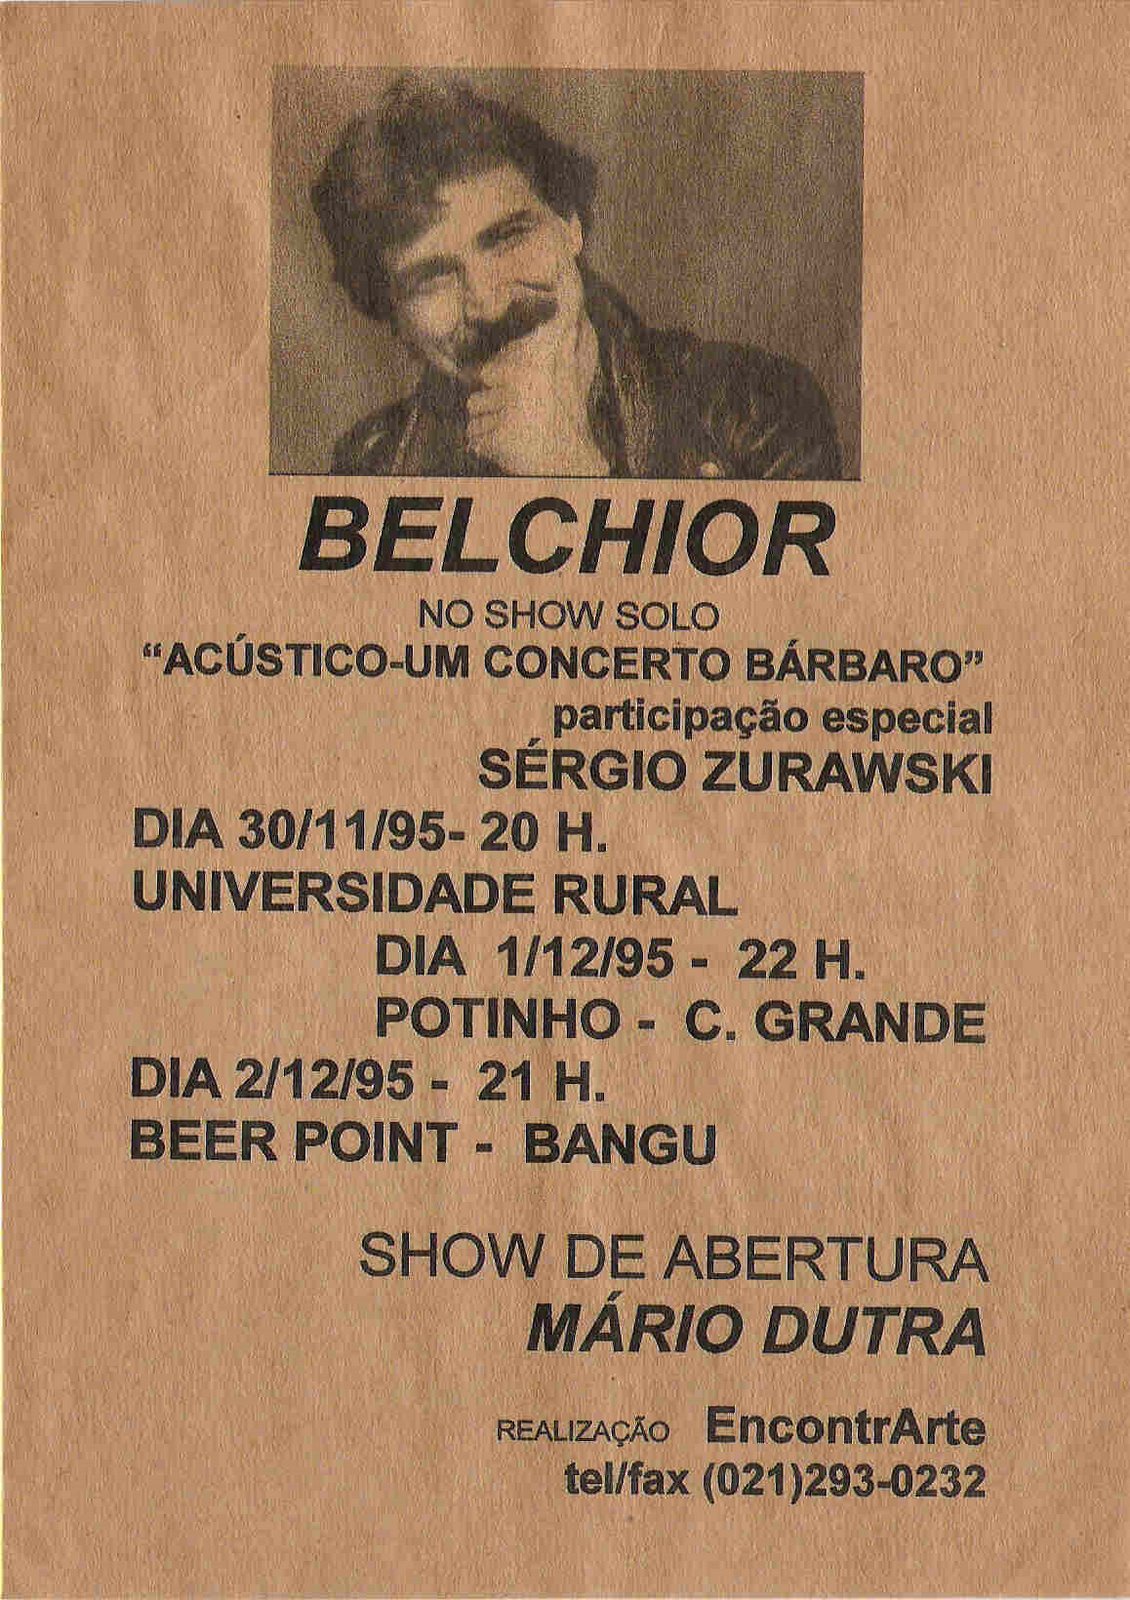 [Belchior+Programa+de+show.jpg]